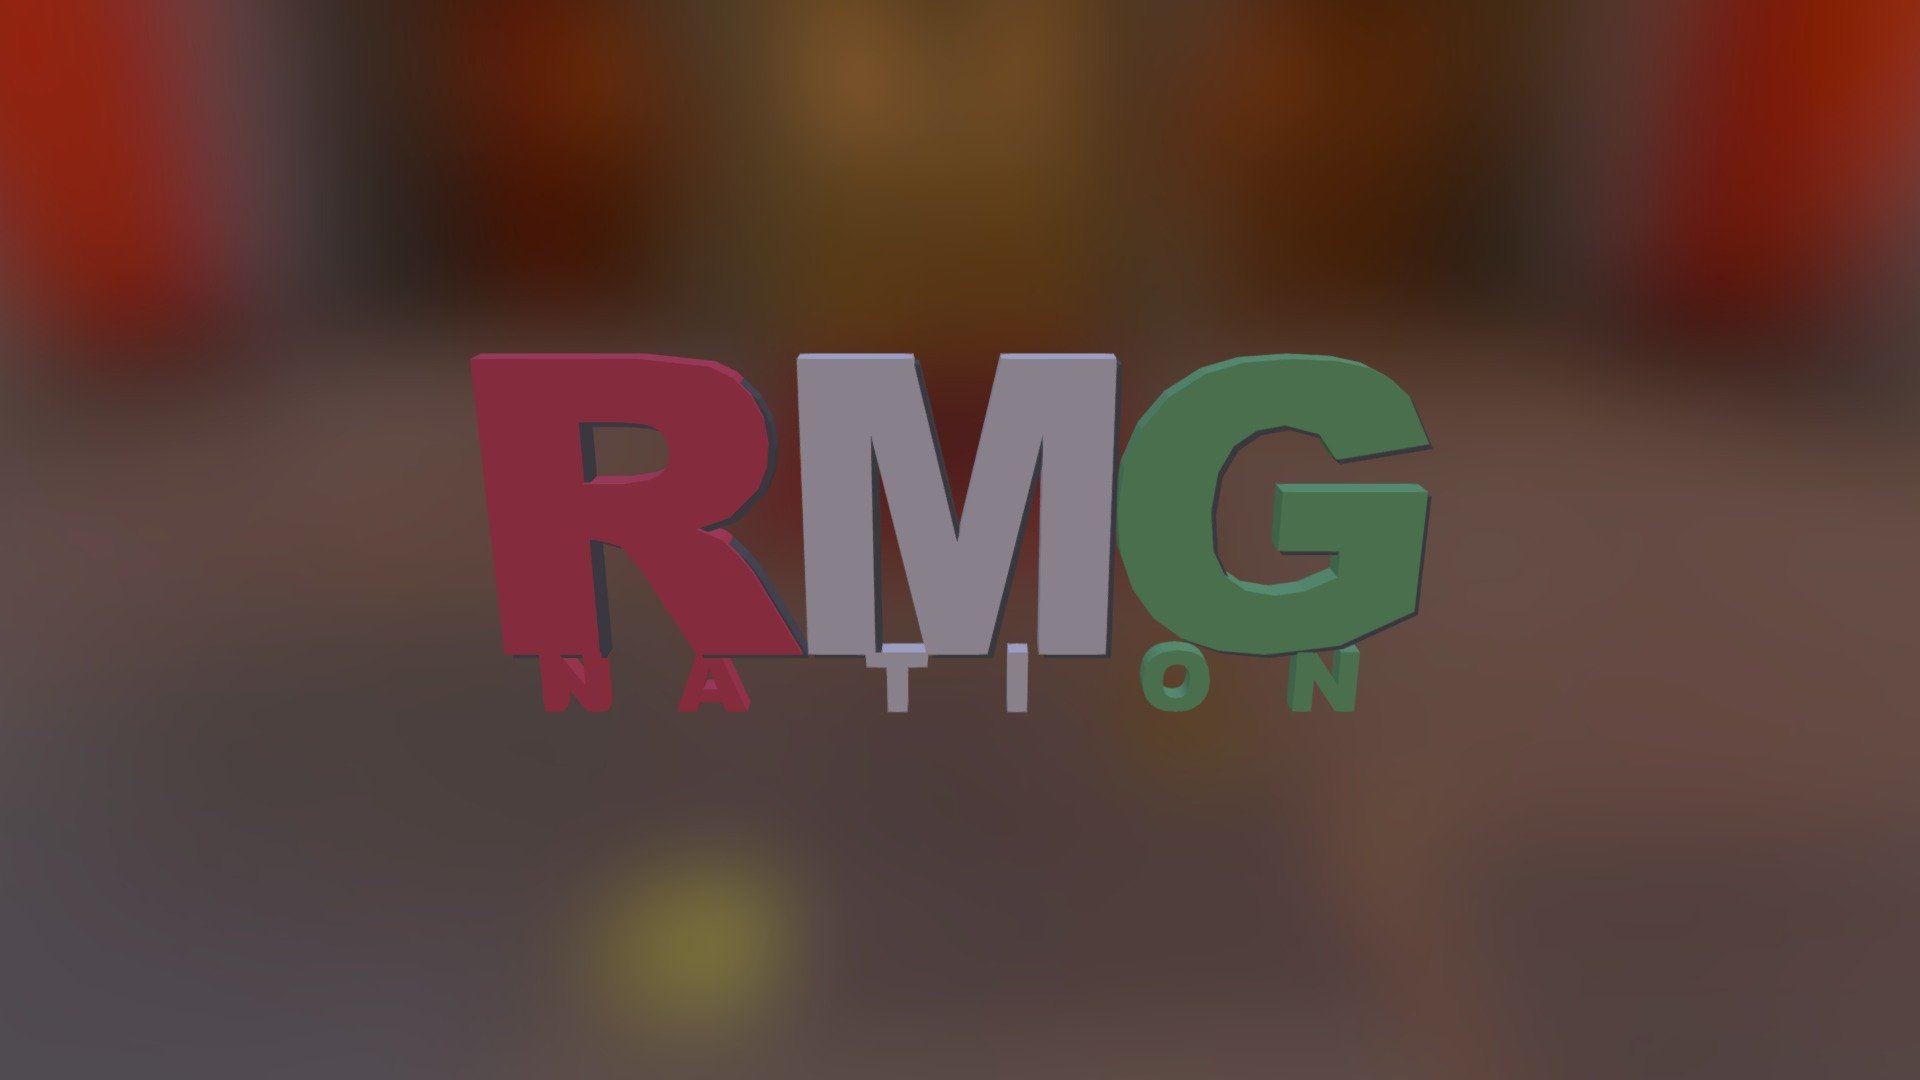 RMG Nation